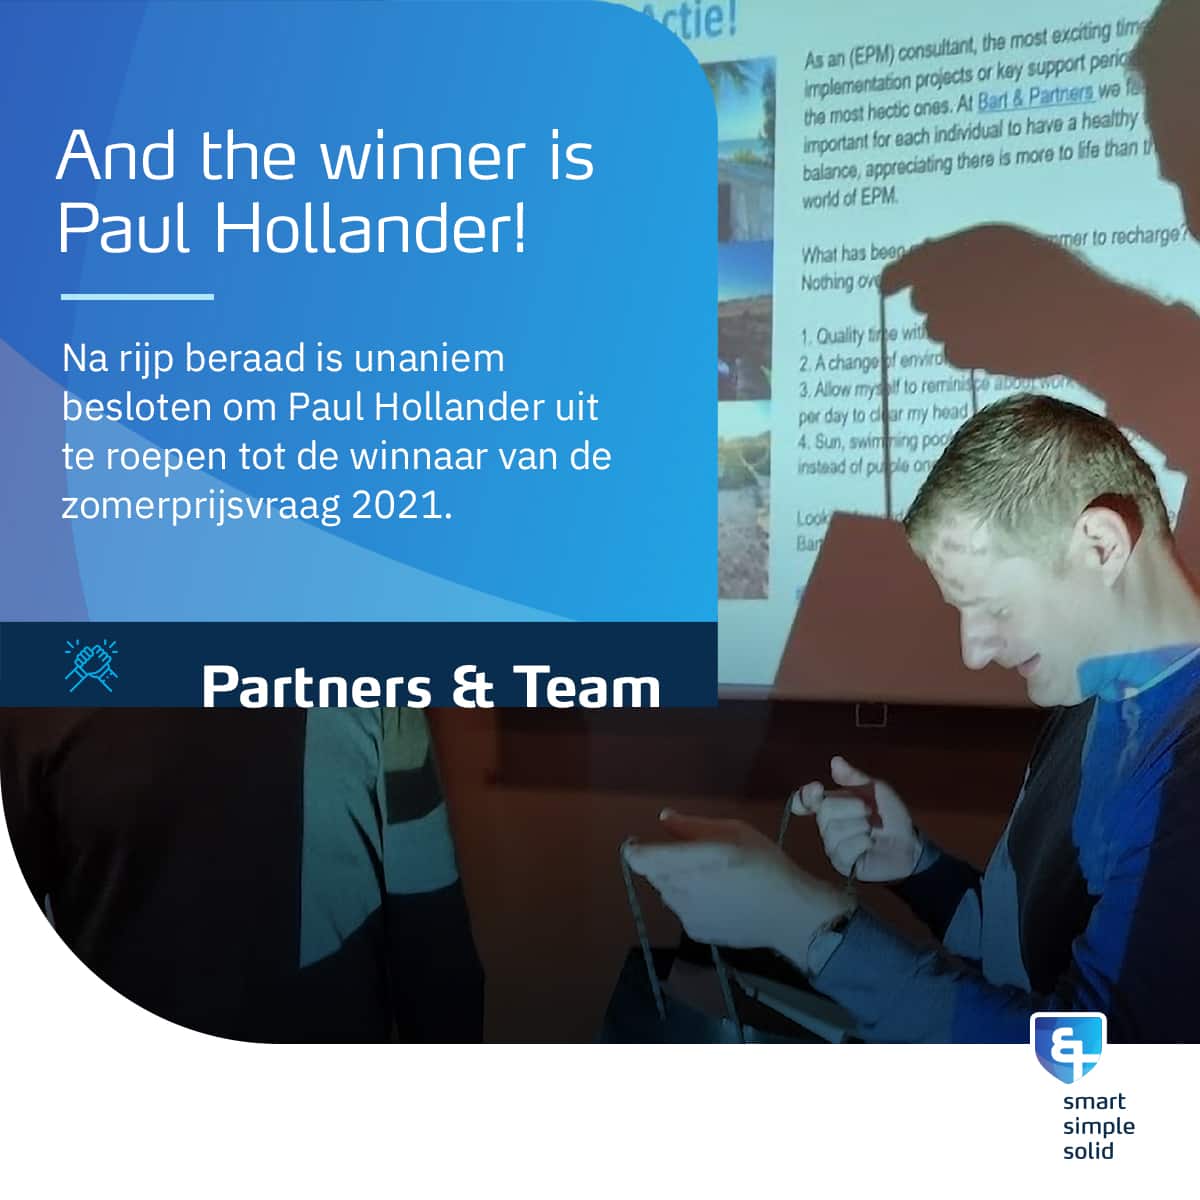 And the winner is Paul Hollander!